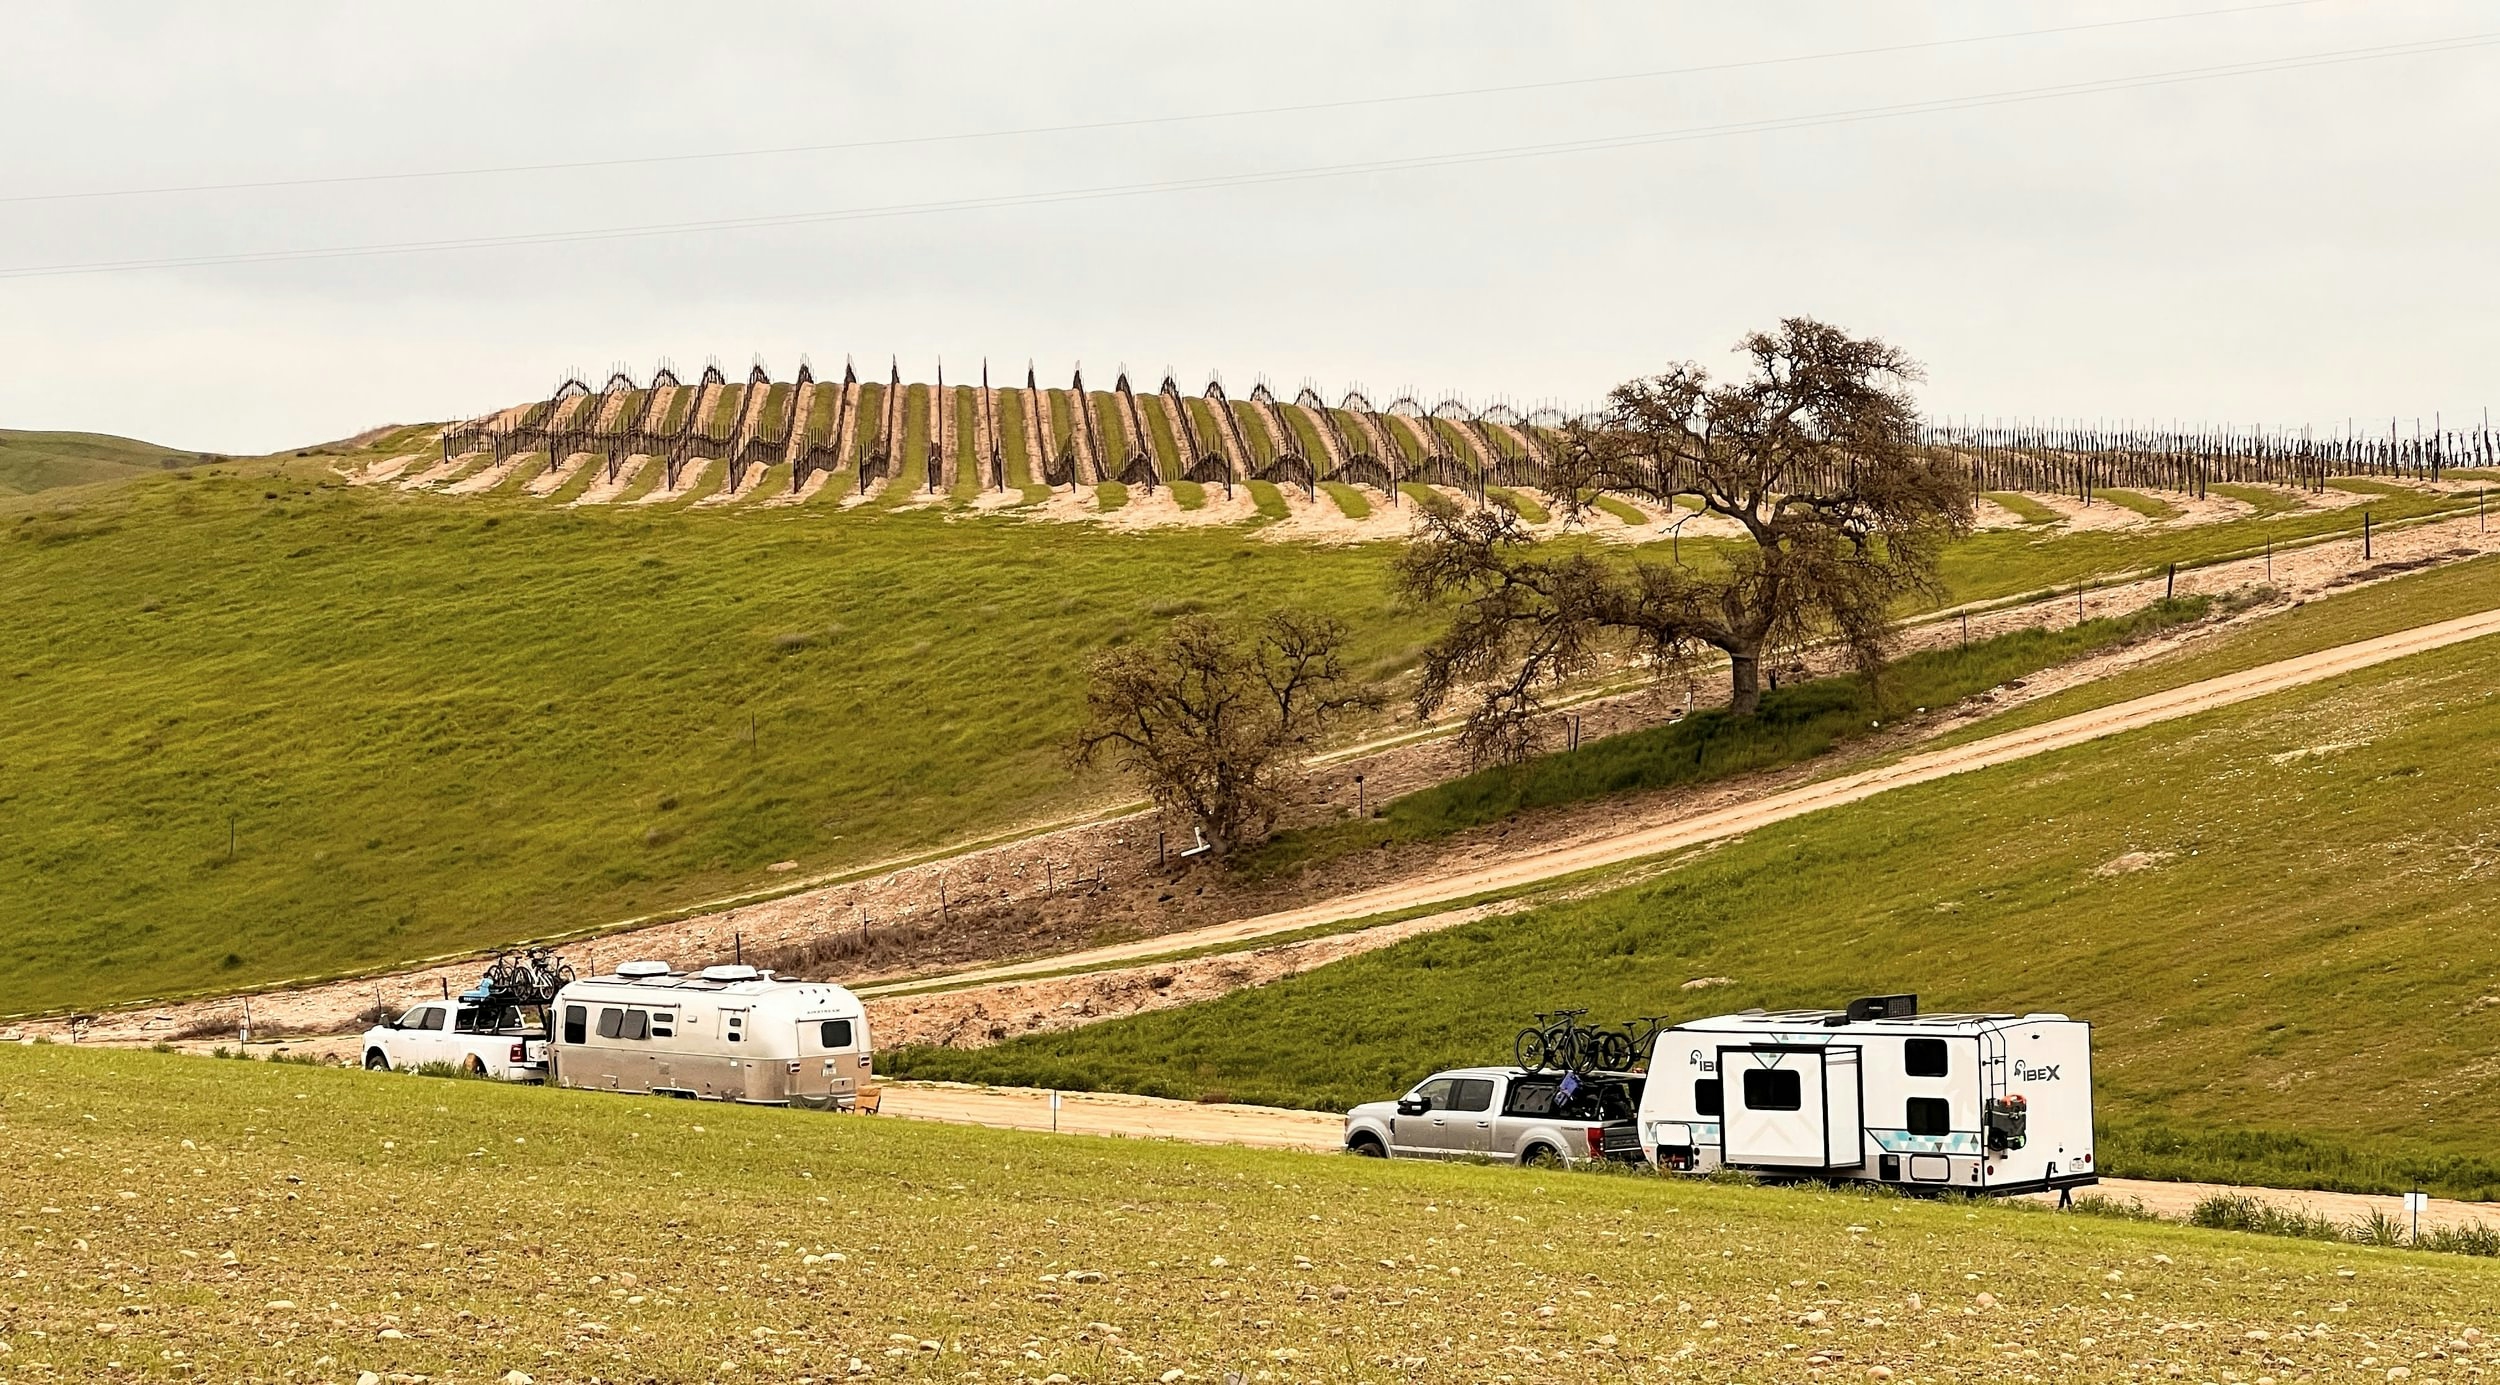 Image of California RV Camping